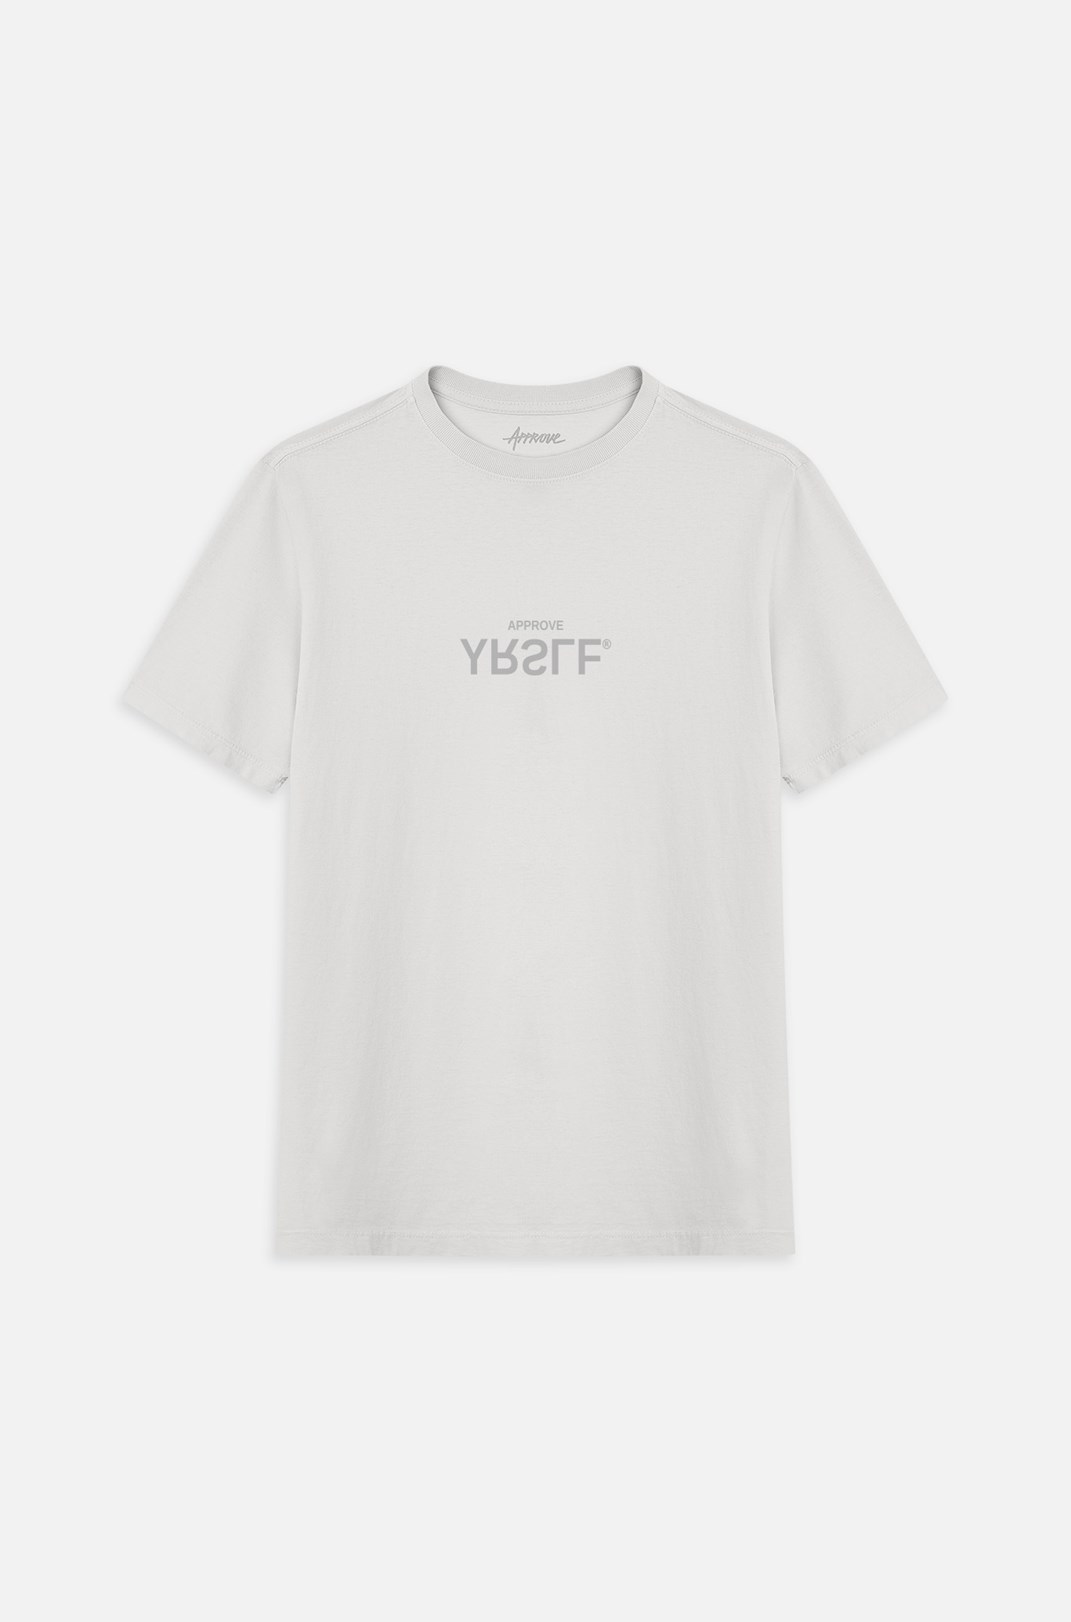 Camiseta Bold Approve Yrslf Inverse Collors Off White